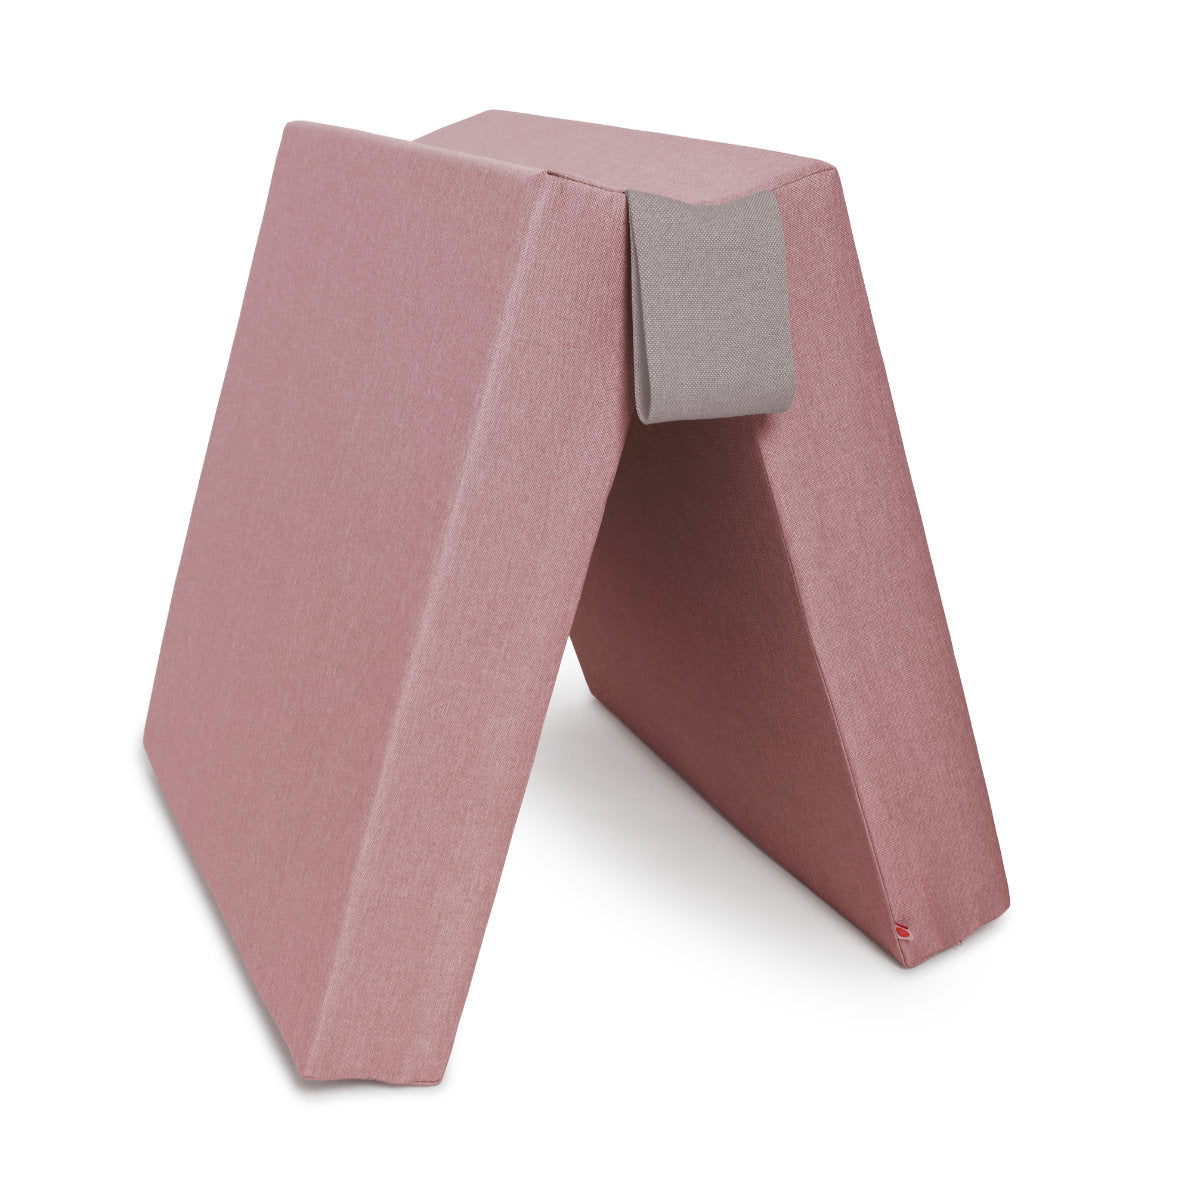 Klapppolster von Nanito für Polsterset Kinderbett Minimalmaxi pastell rosa